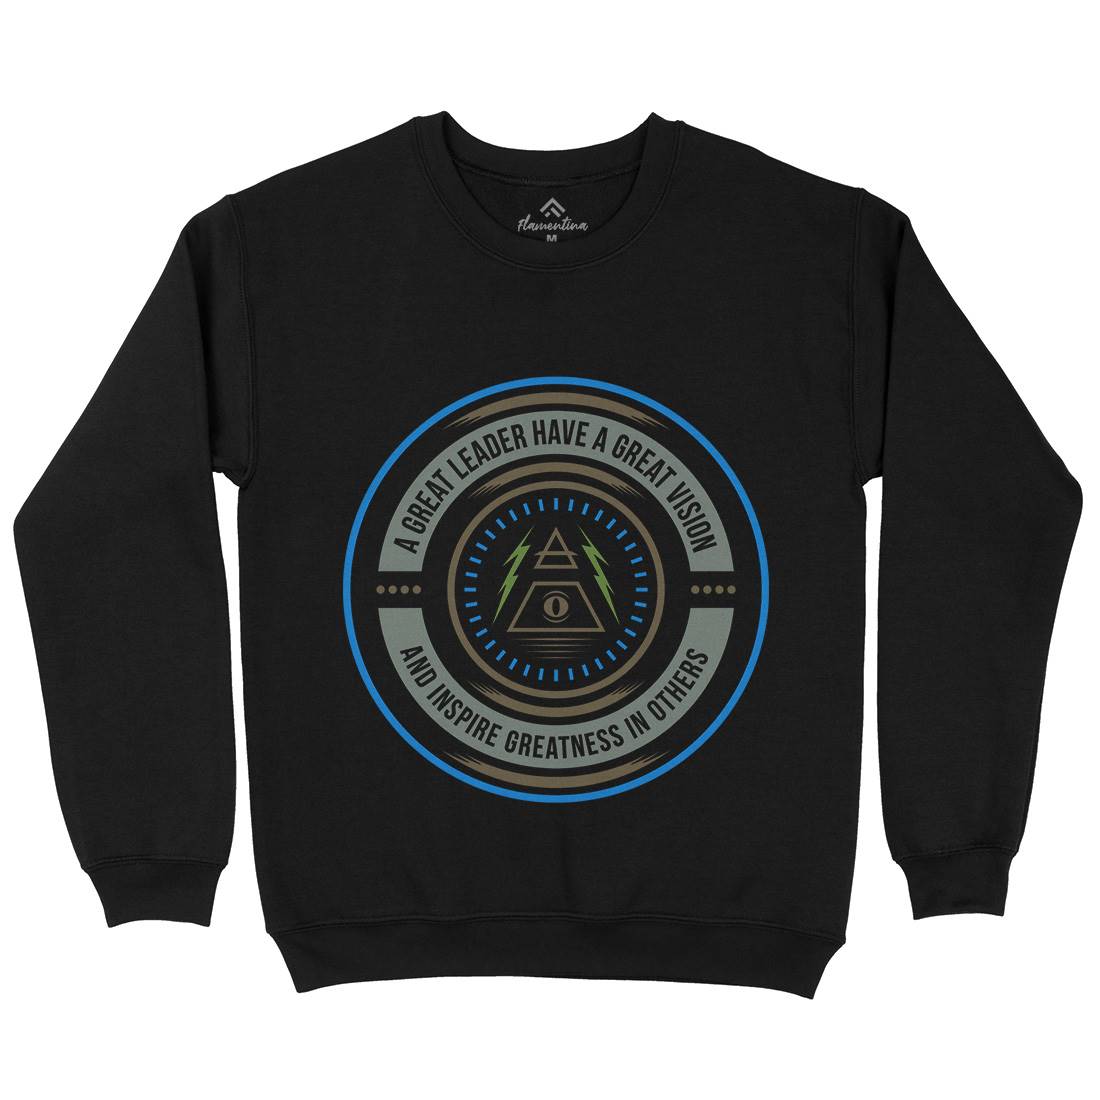 Great Vision Kids Crew Neck Sweatshirt Illuminati A323